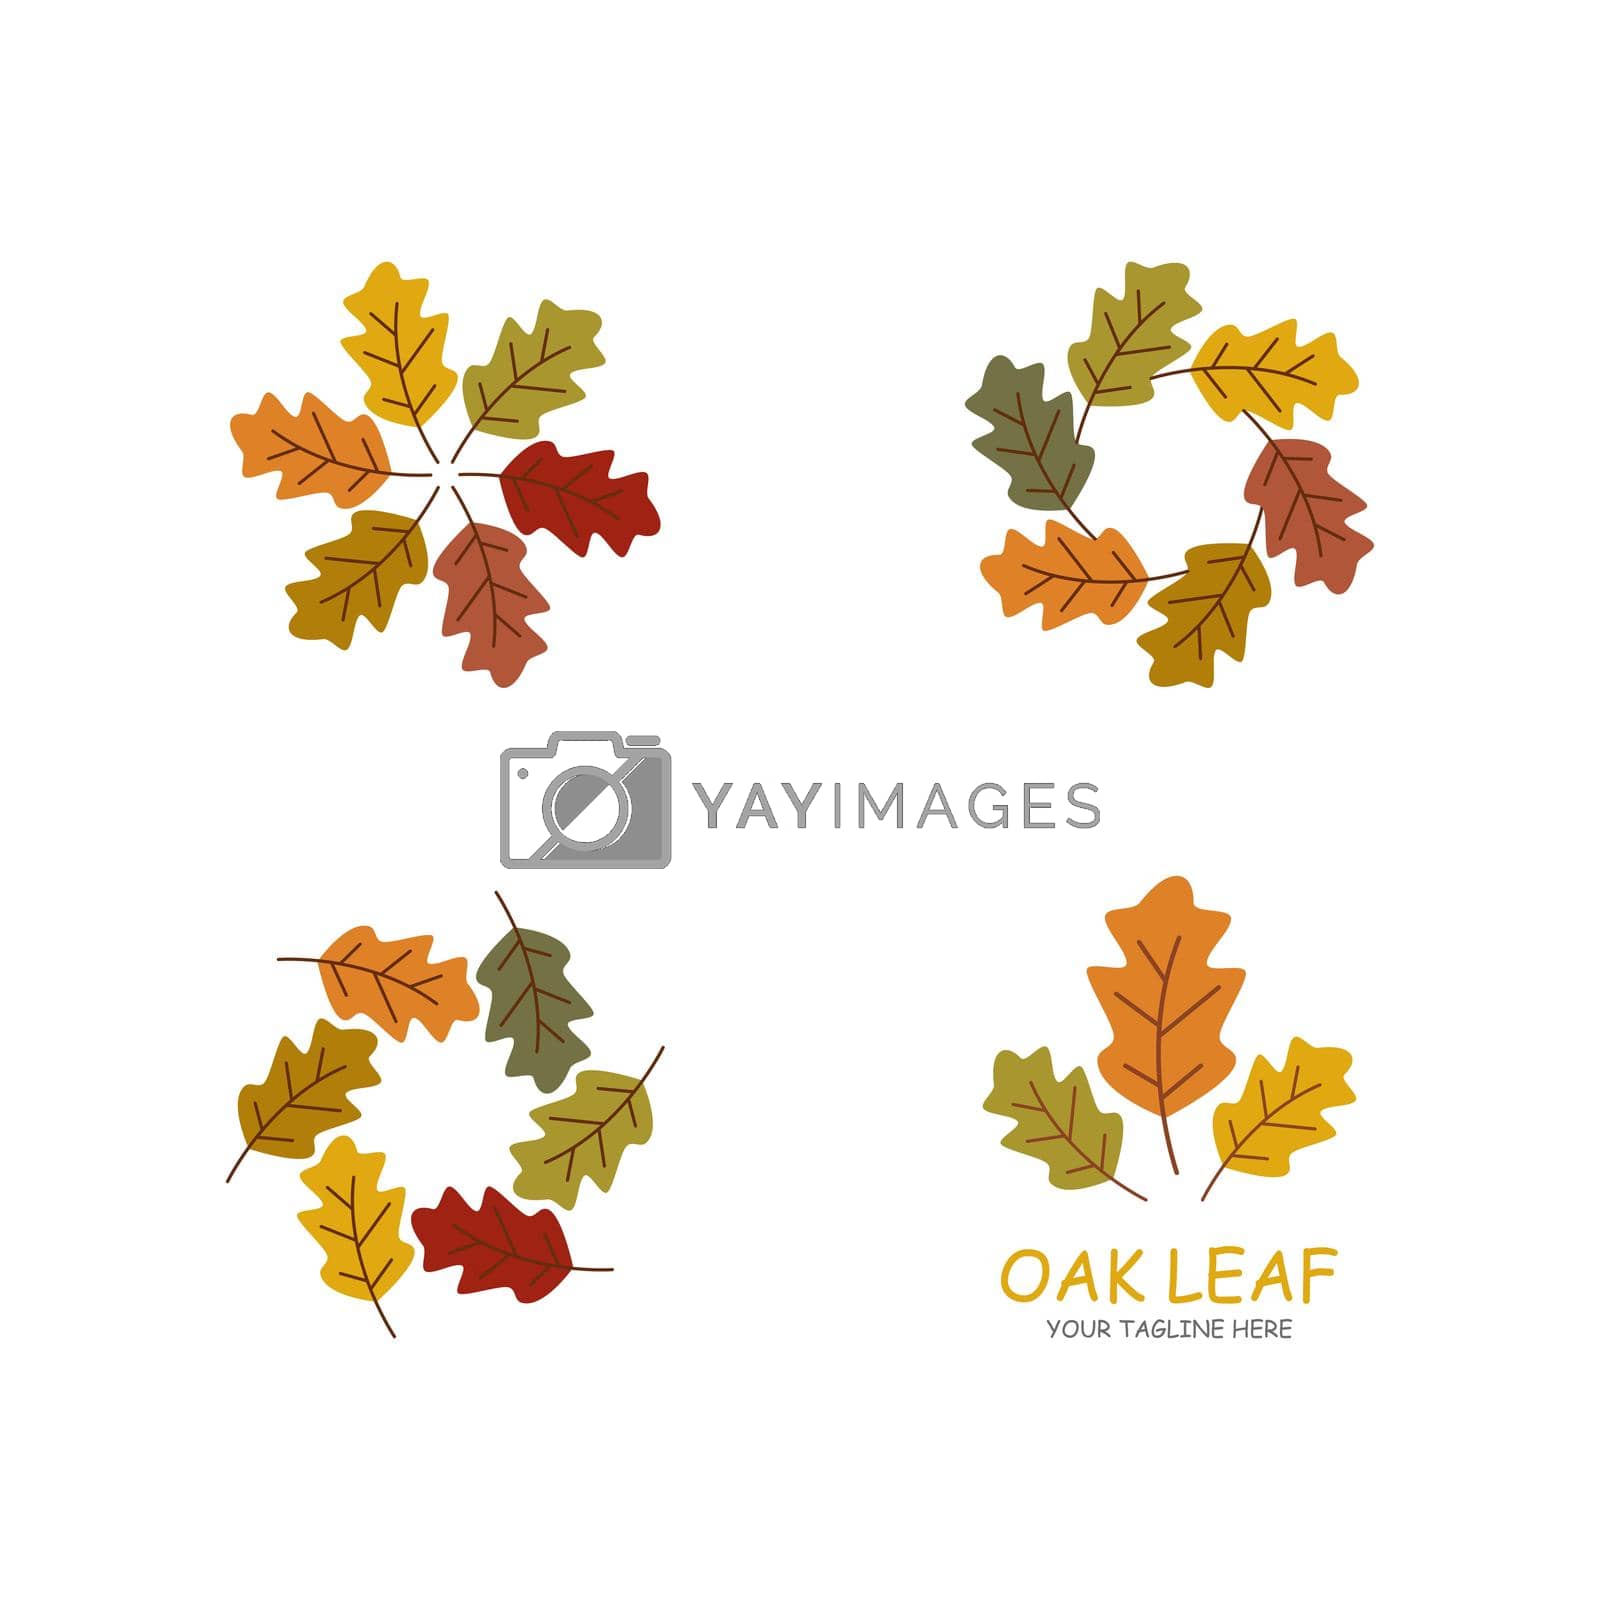 Royalty free image of oak leaf logo by awk